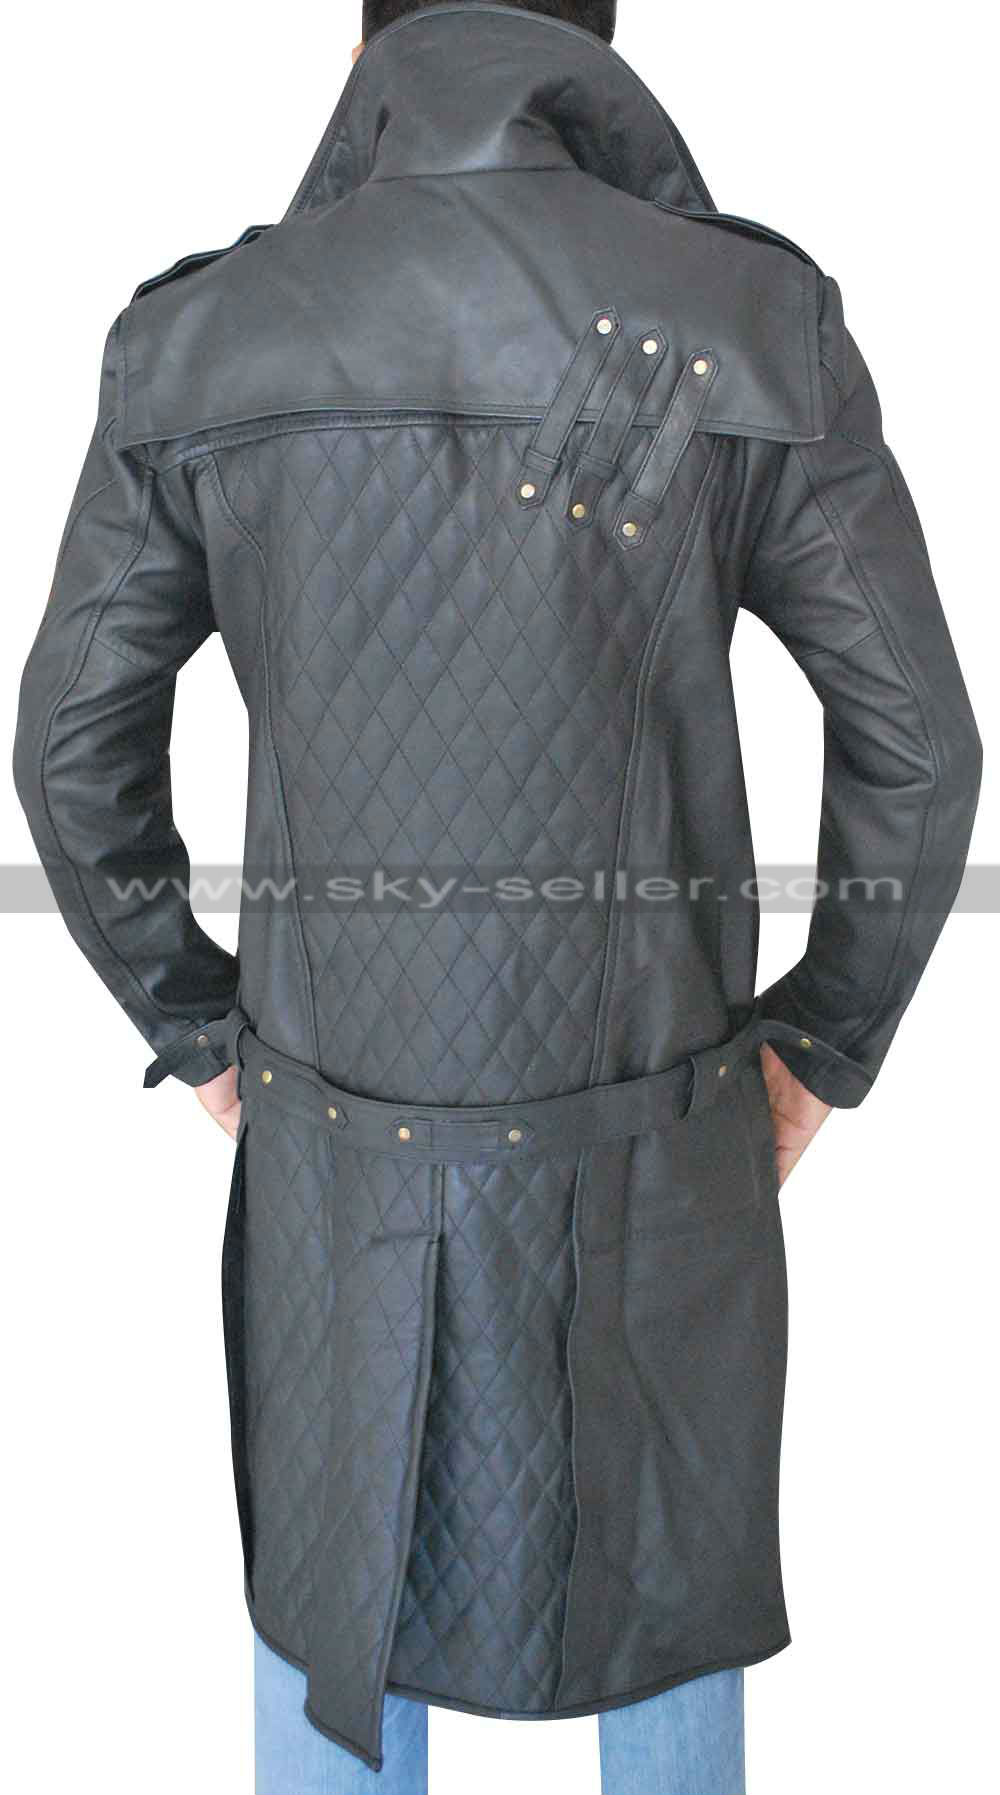 Jacob Frye Assassin’s Creed Syndicate Leather Coat